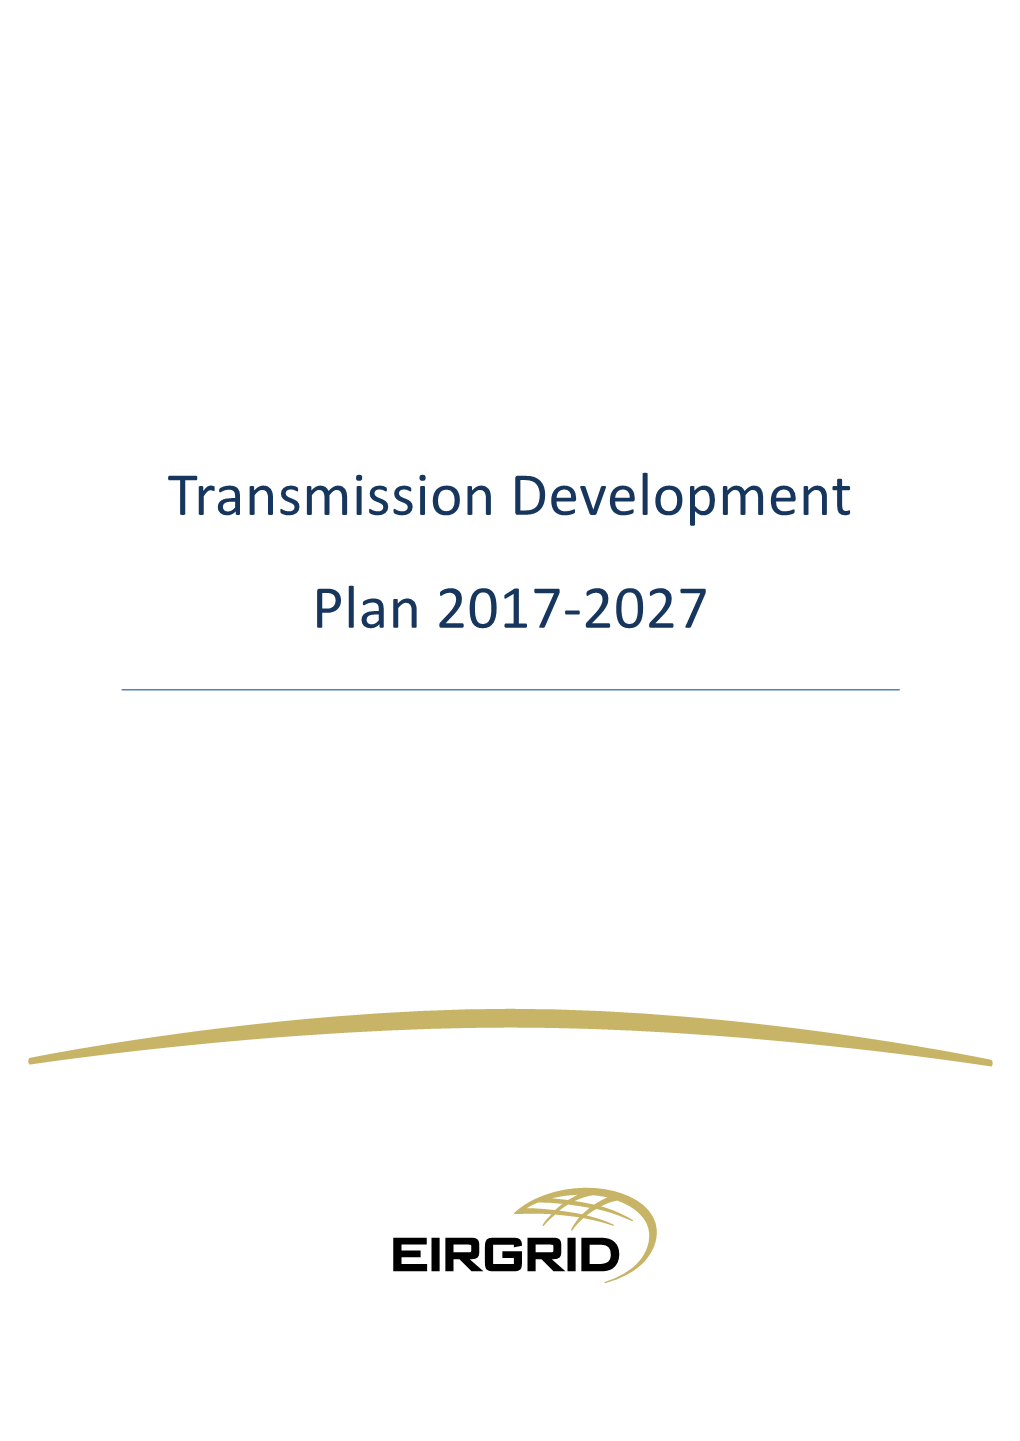 Transmission Development Plan 2017-2027